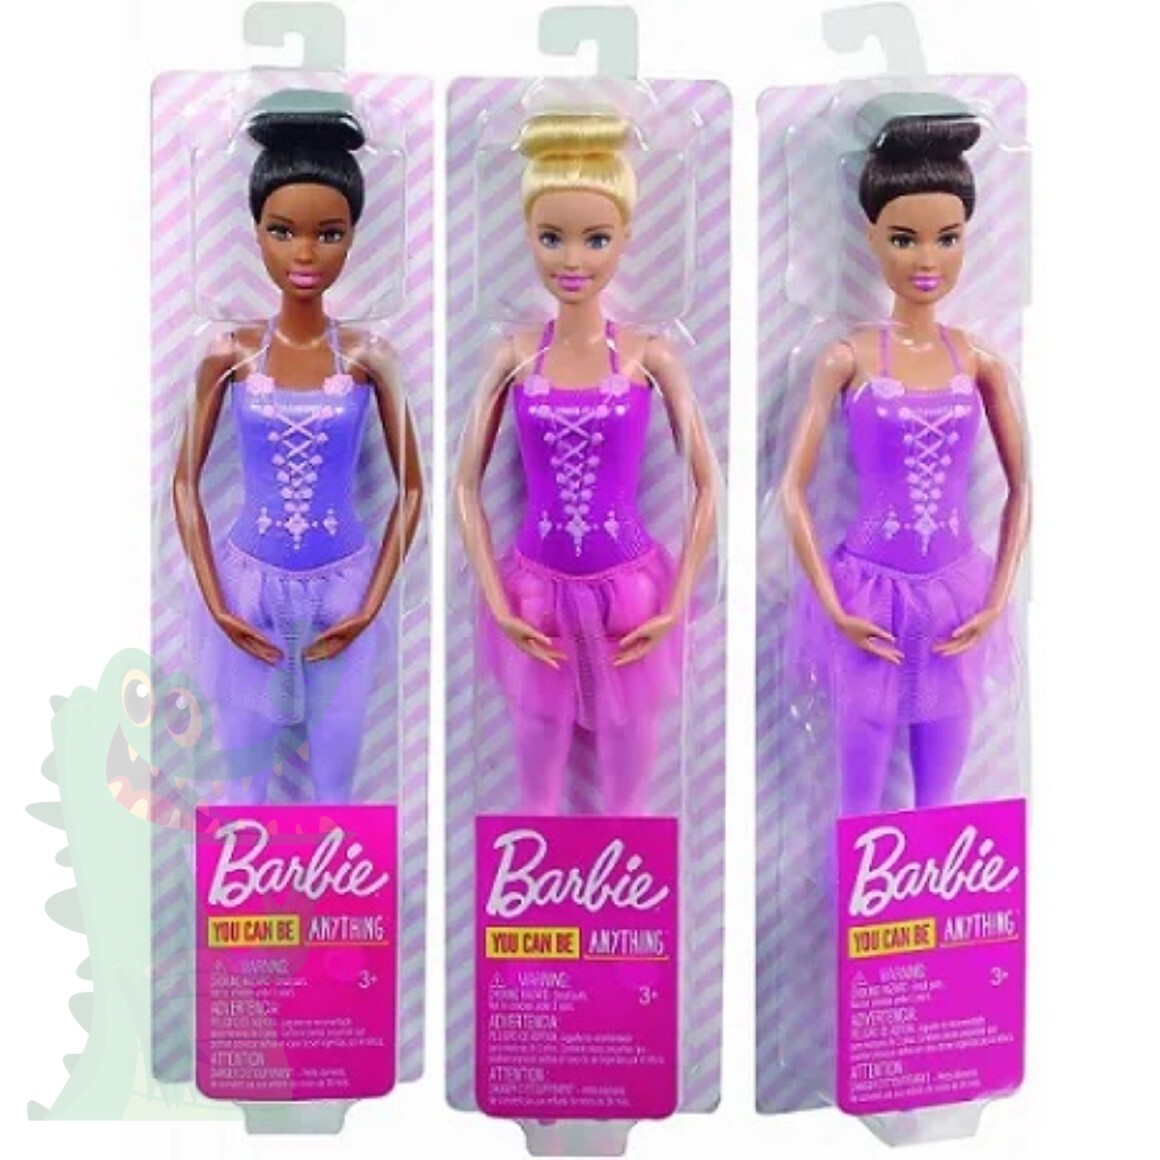 Boneca Barbie Profissoes - Carreira Surpresa - 8 Surpresas - Mattel MATTEL